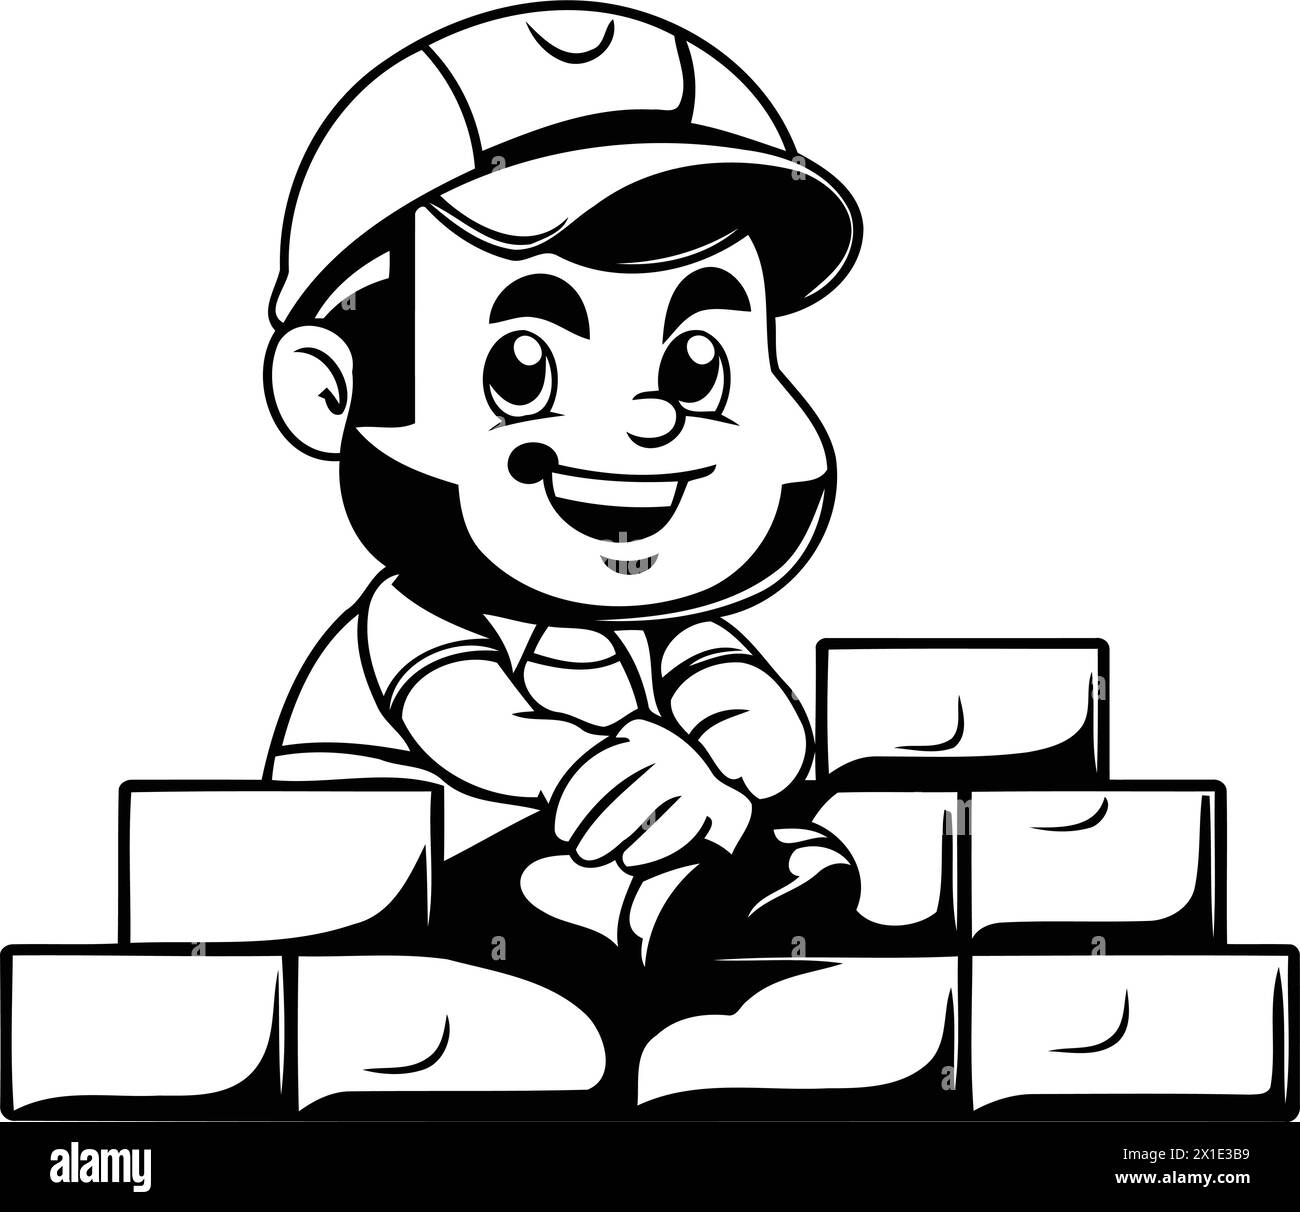 Cartoon bricklayer vector illustration. Cute cartoon bricklayer building a wall Stock Vector